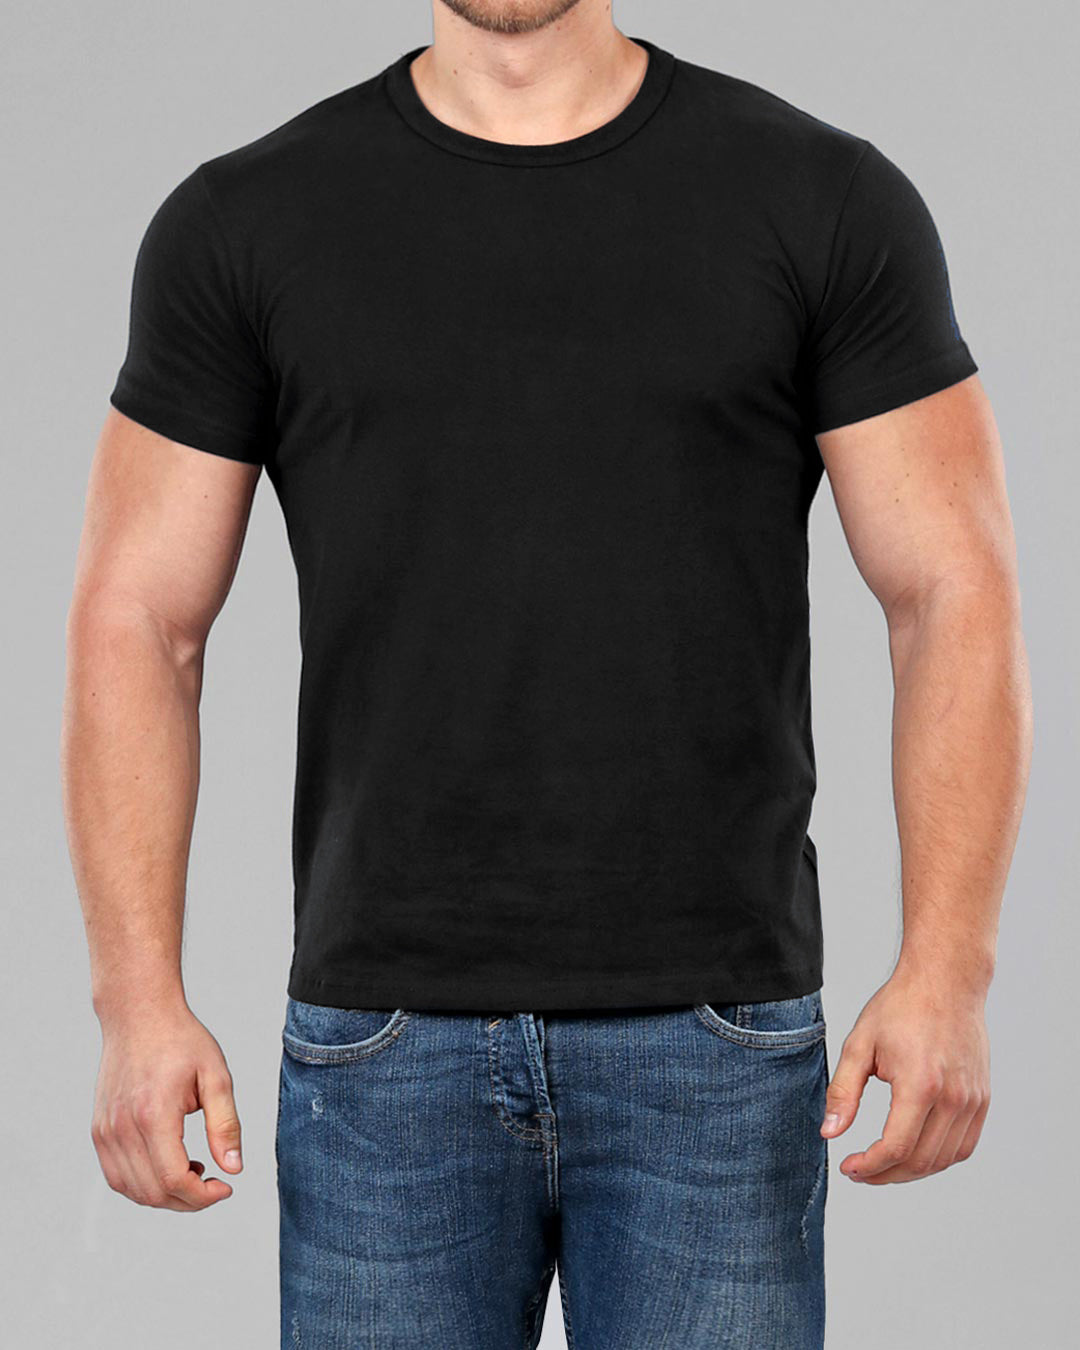 Men's Black Crew Neck Fitted Plain T-Shirt